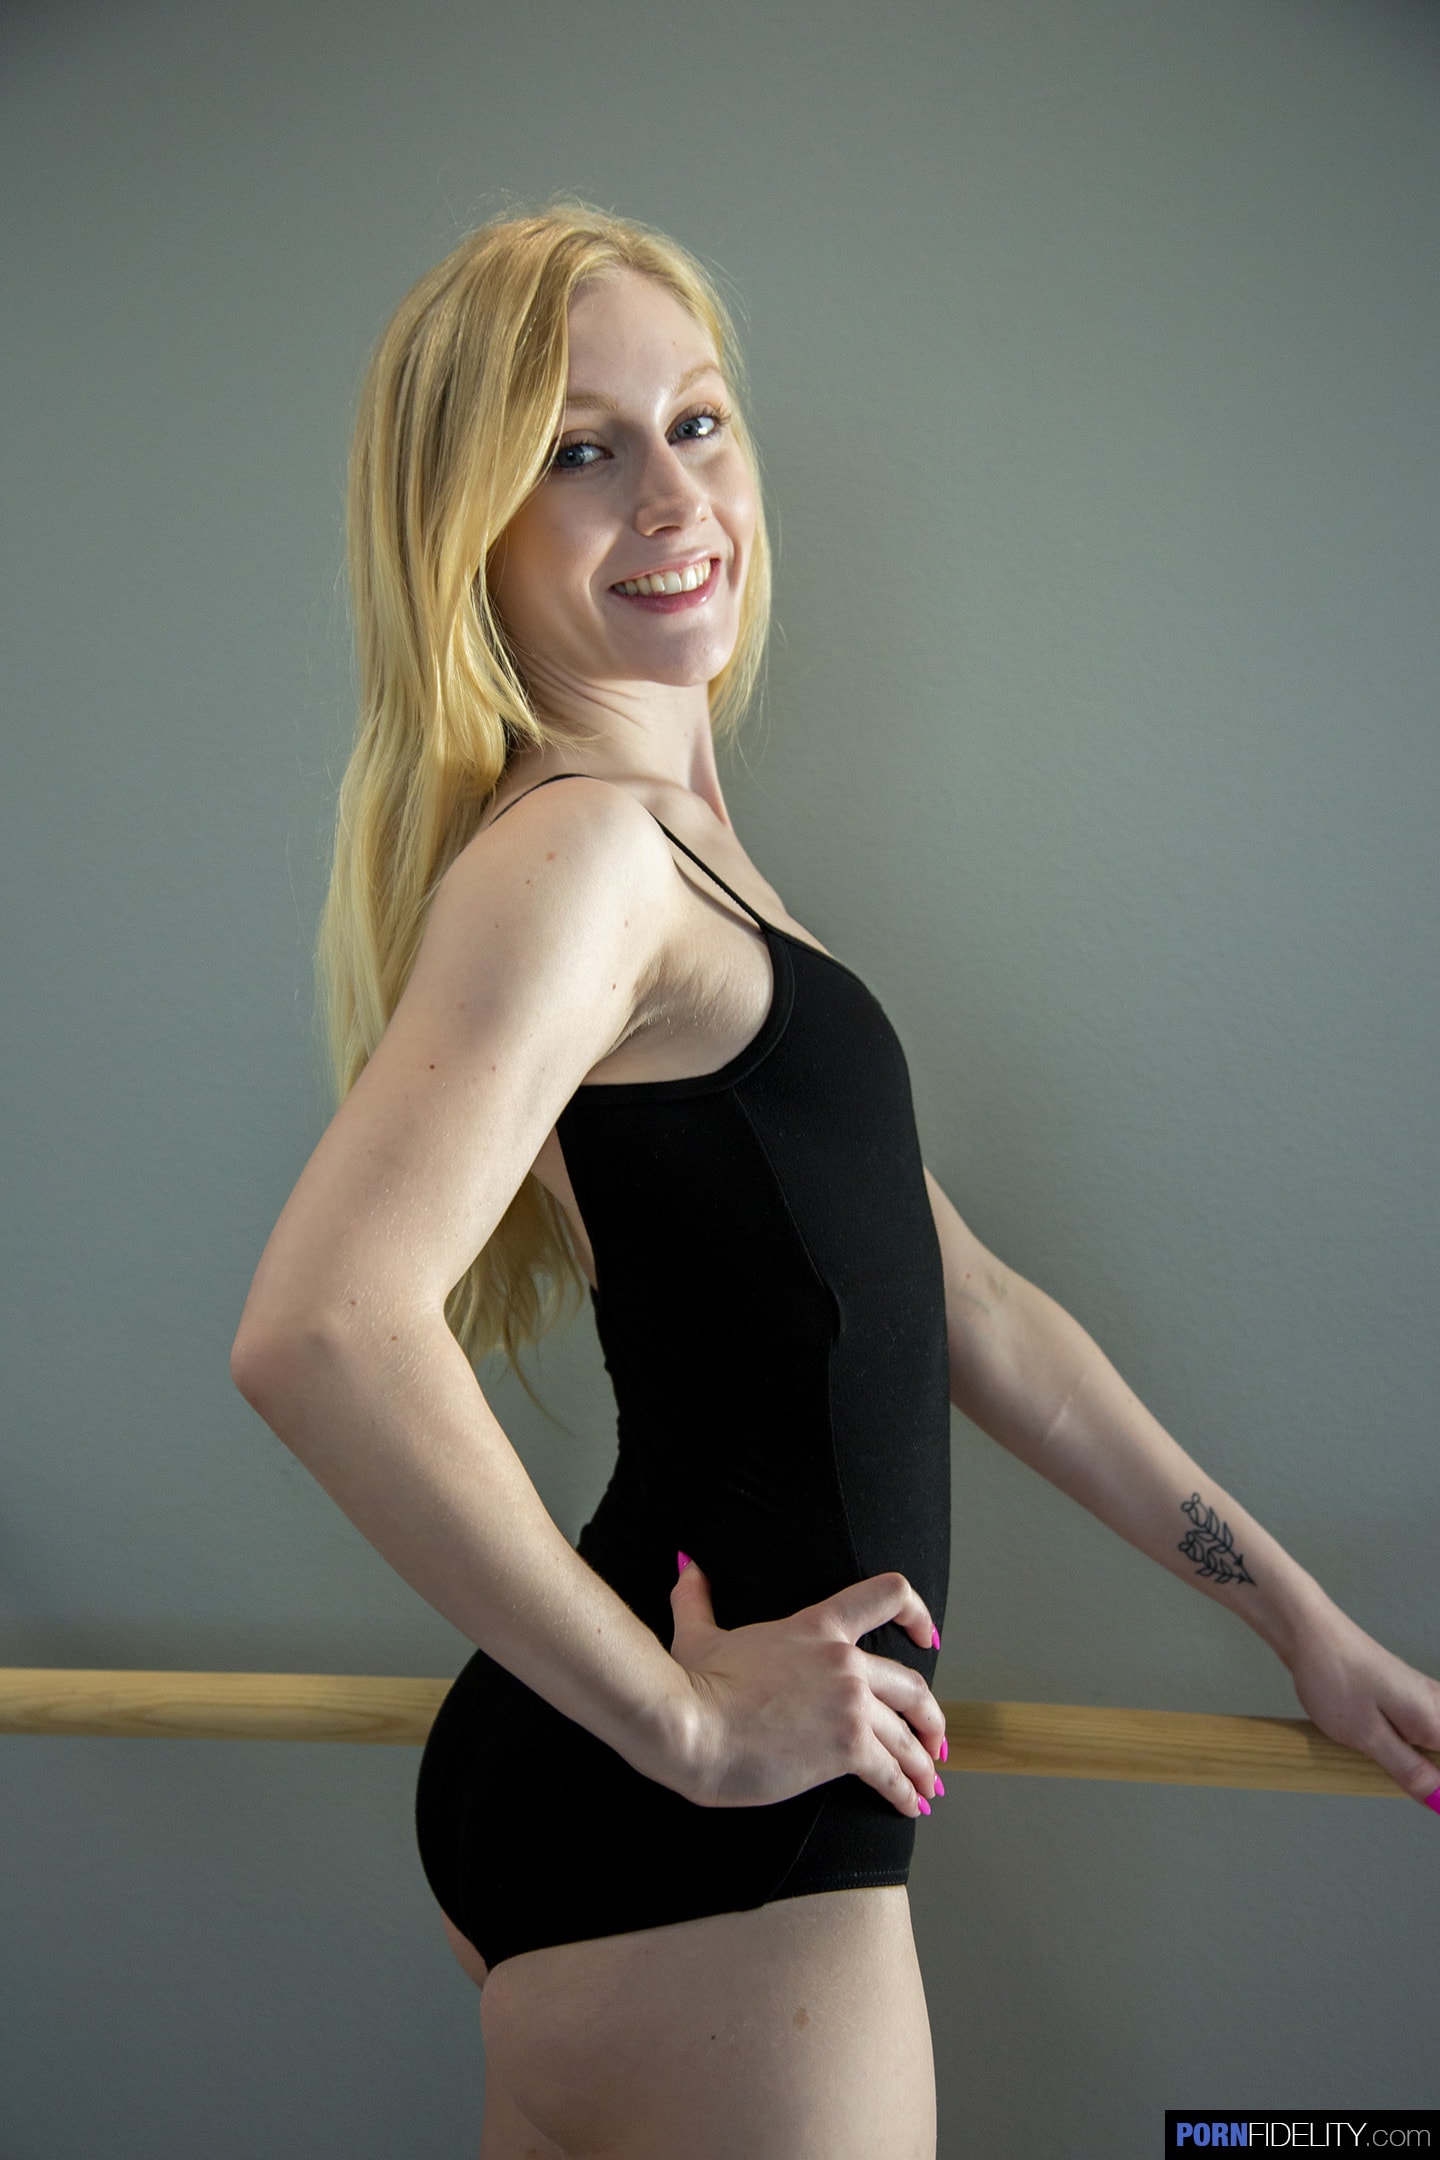 Porn Fidelity 'Blonde Ballerina' starring Emma Starletto (Photo 21)